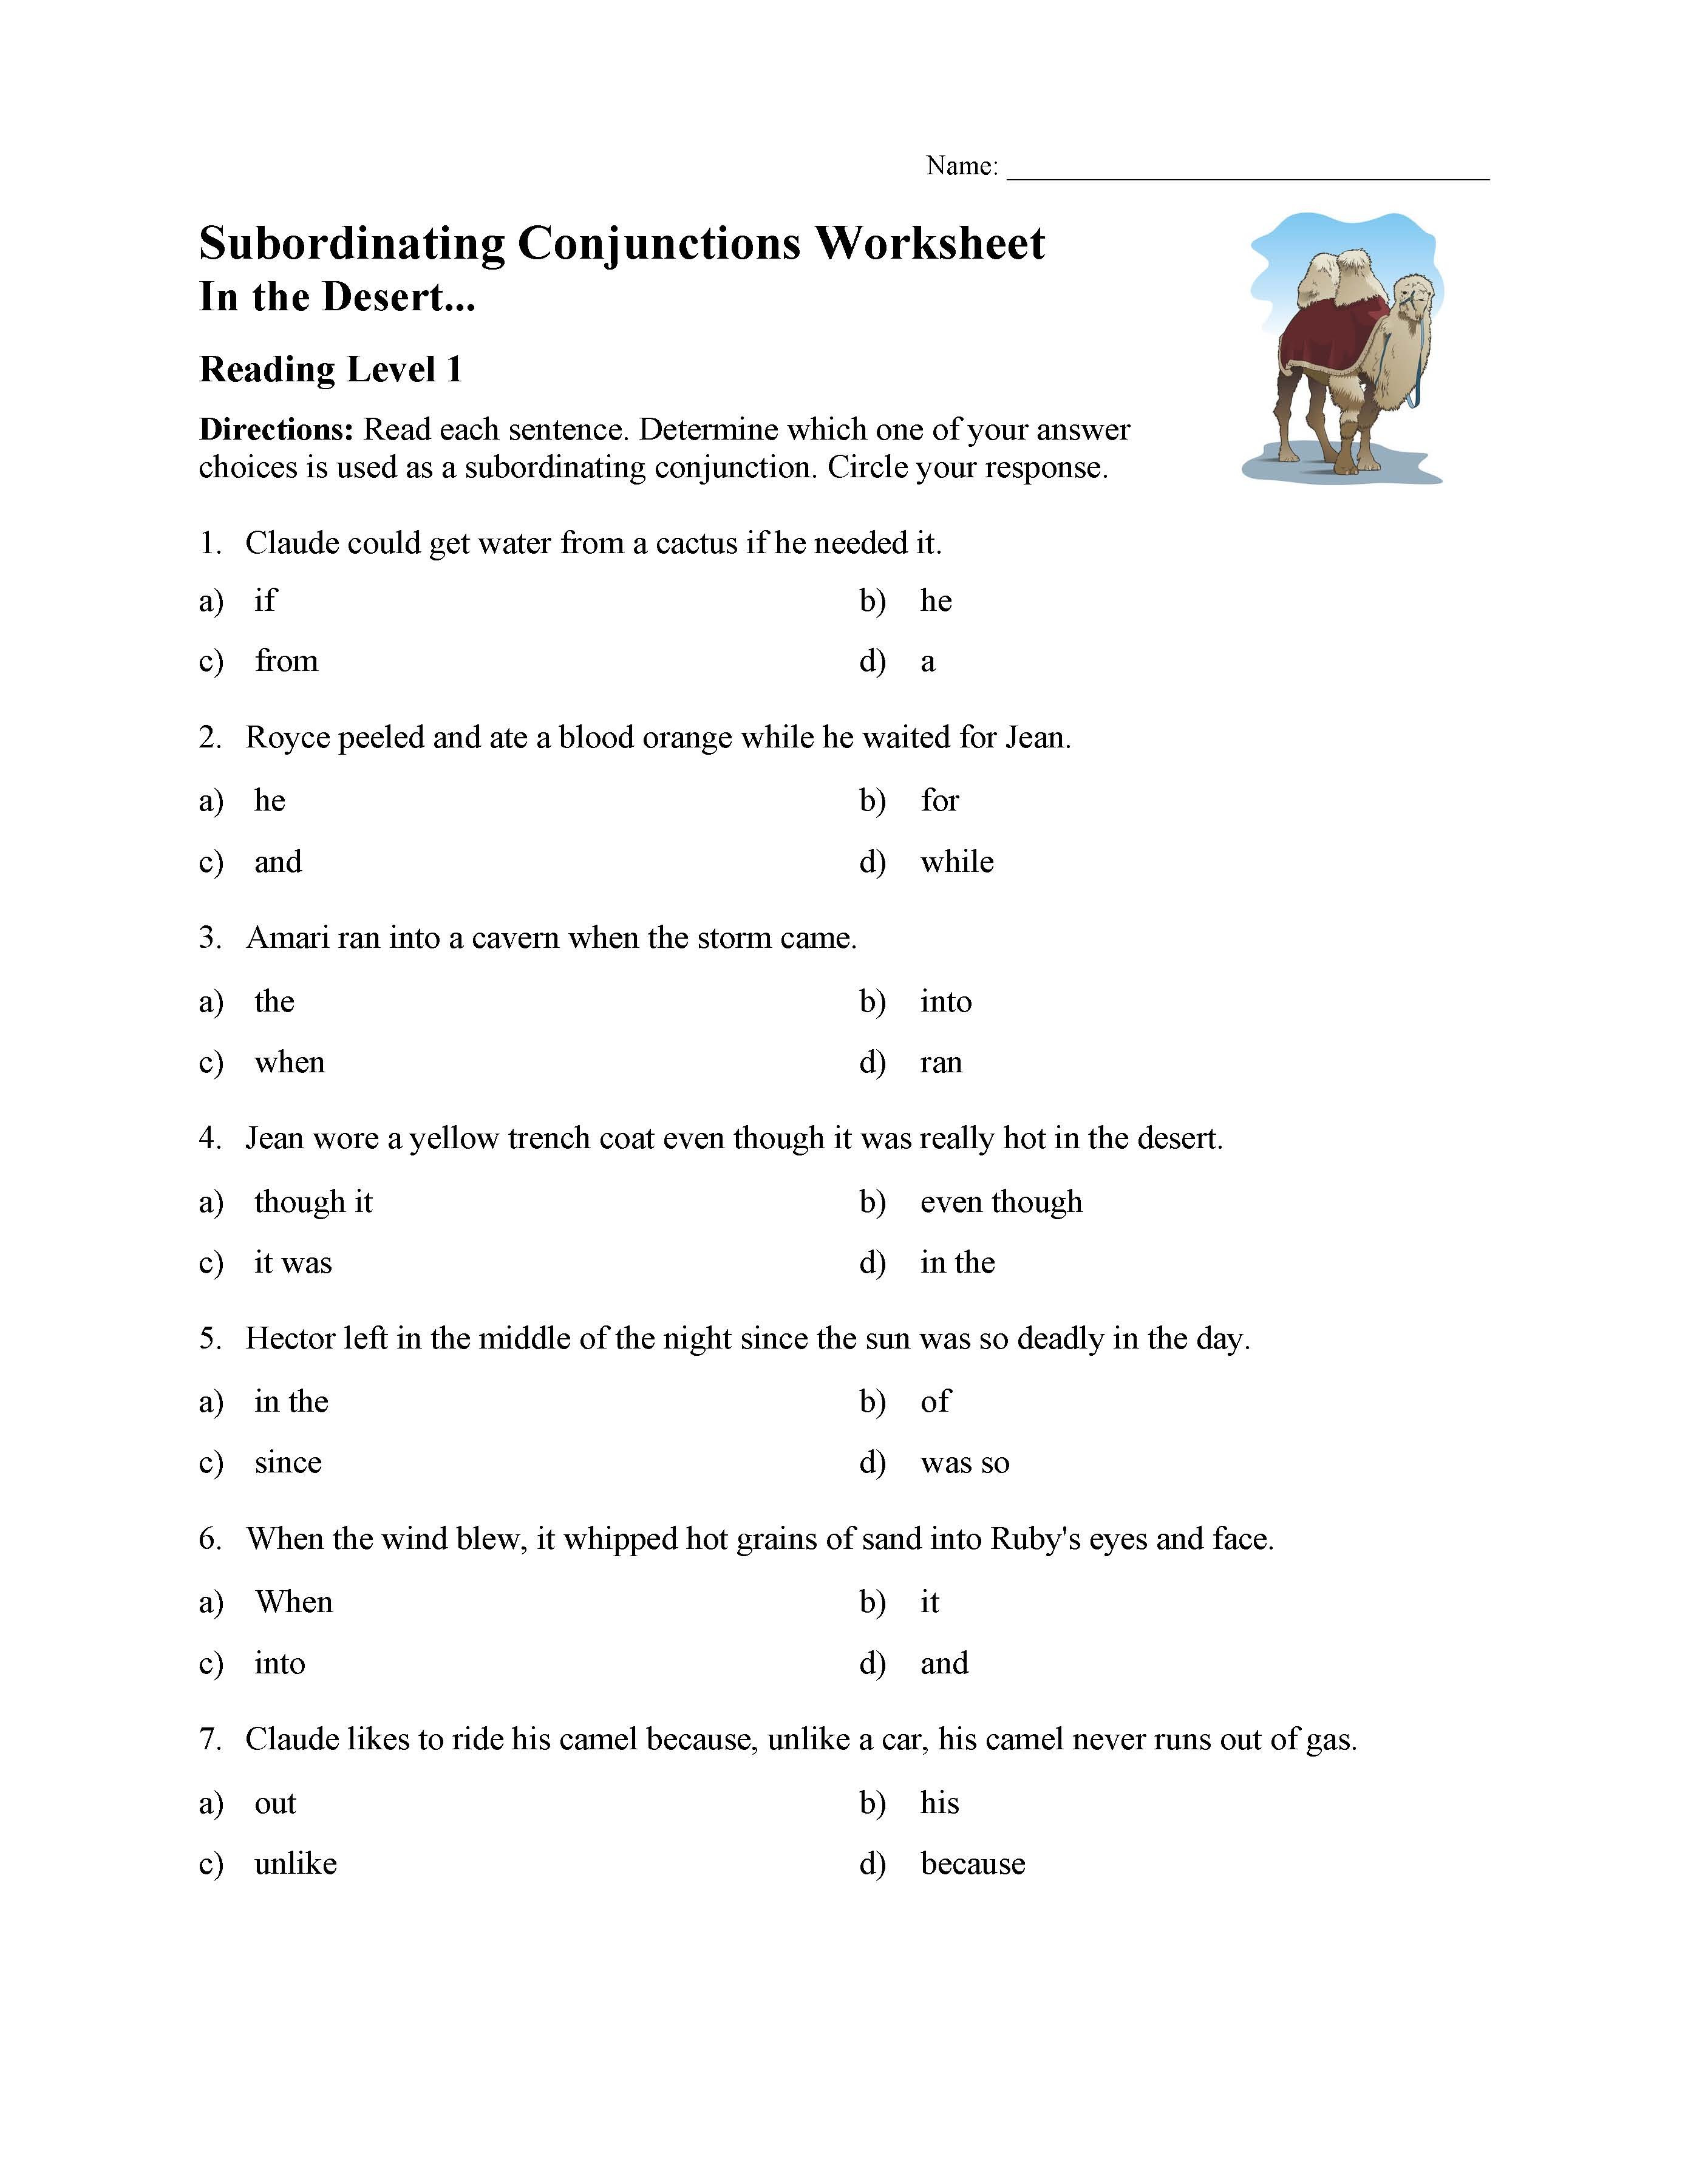 Conjunction Worksheet 5th Grade Subordinating Conjunctions Worksheet Reading Level 1